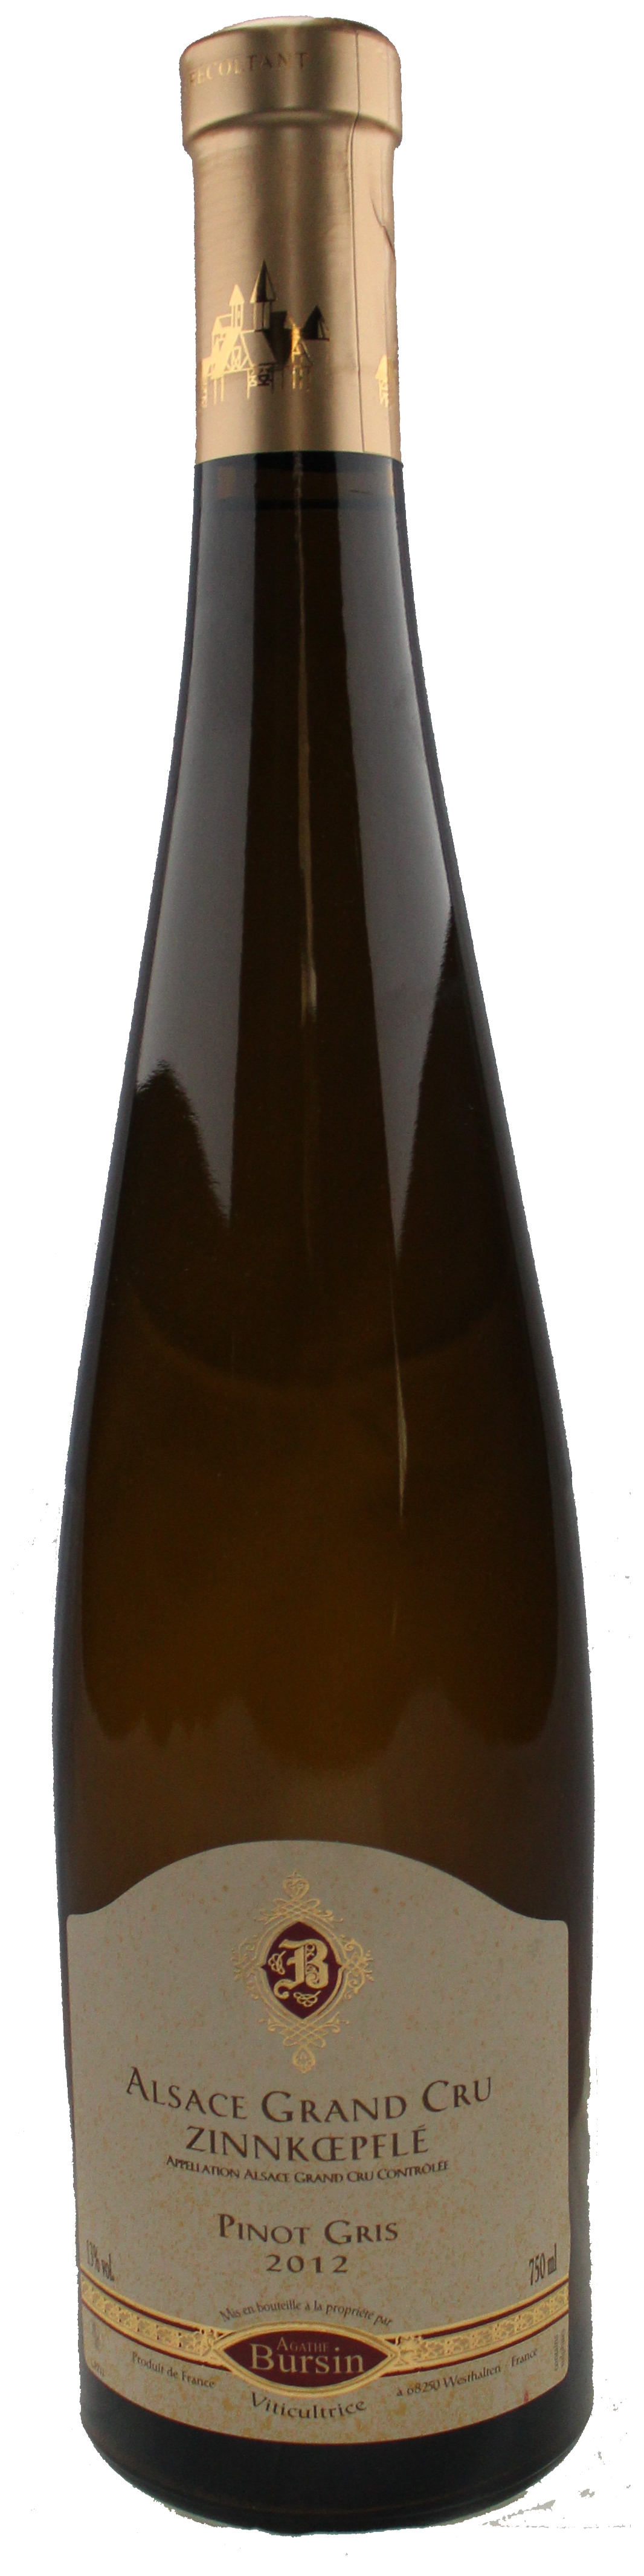 Bottle shot of 2012 Pinot Gris Grand Cru Zinnkoepfle